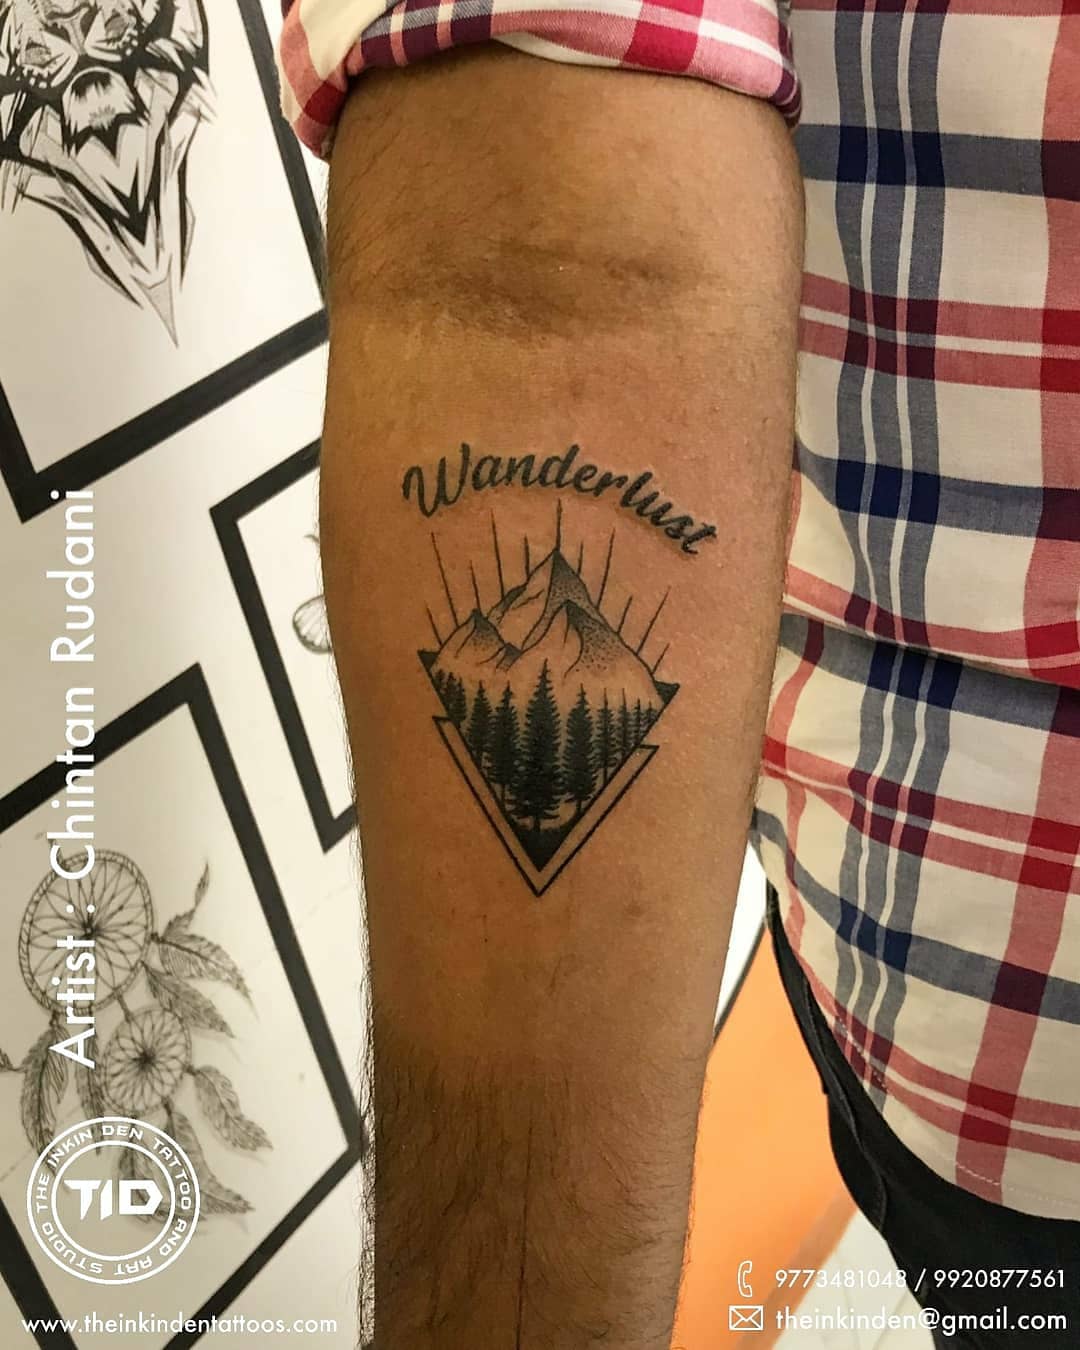 Wanderer, a path and Matterhorn. Sleeve done by Natalie in DK Tattoo  Rzeszów. : r/tattoos